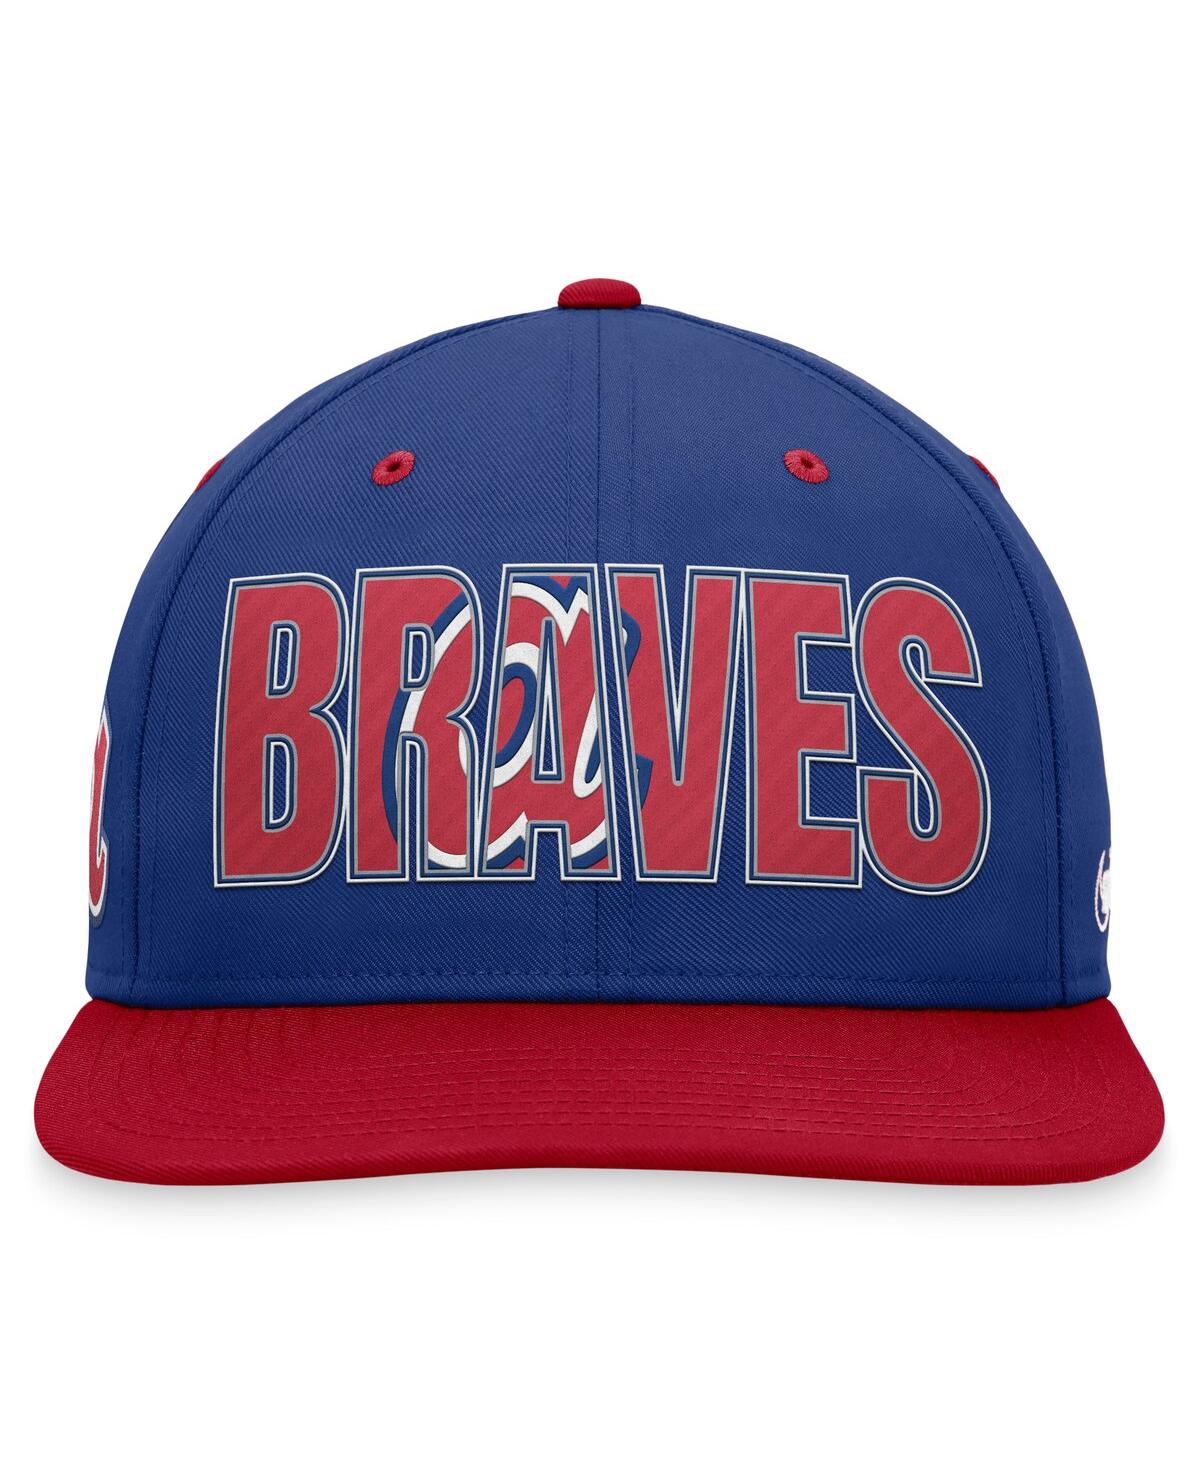 Shop Nike Men's  Royal Atlanta Braves Cooperstown Collection Pro Snapback Hat